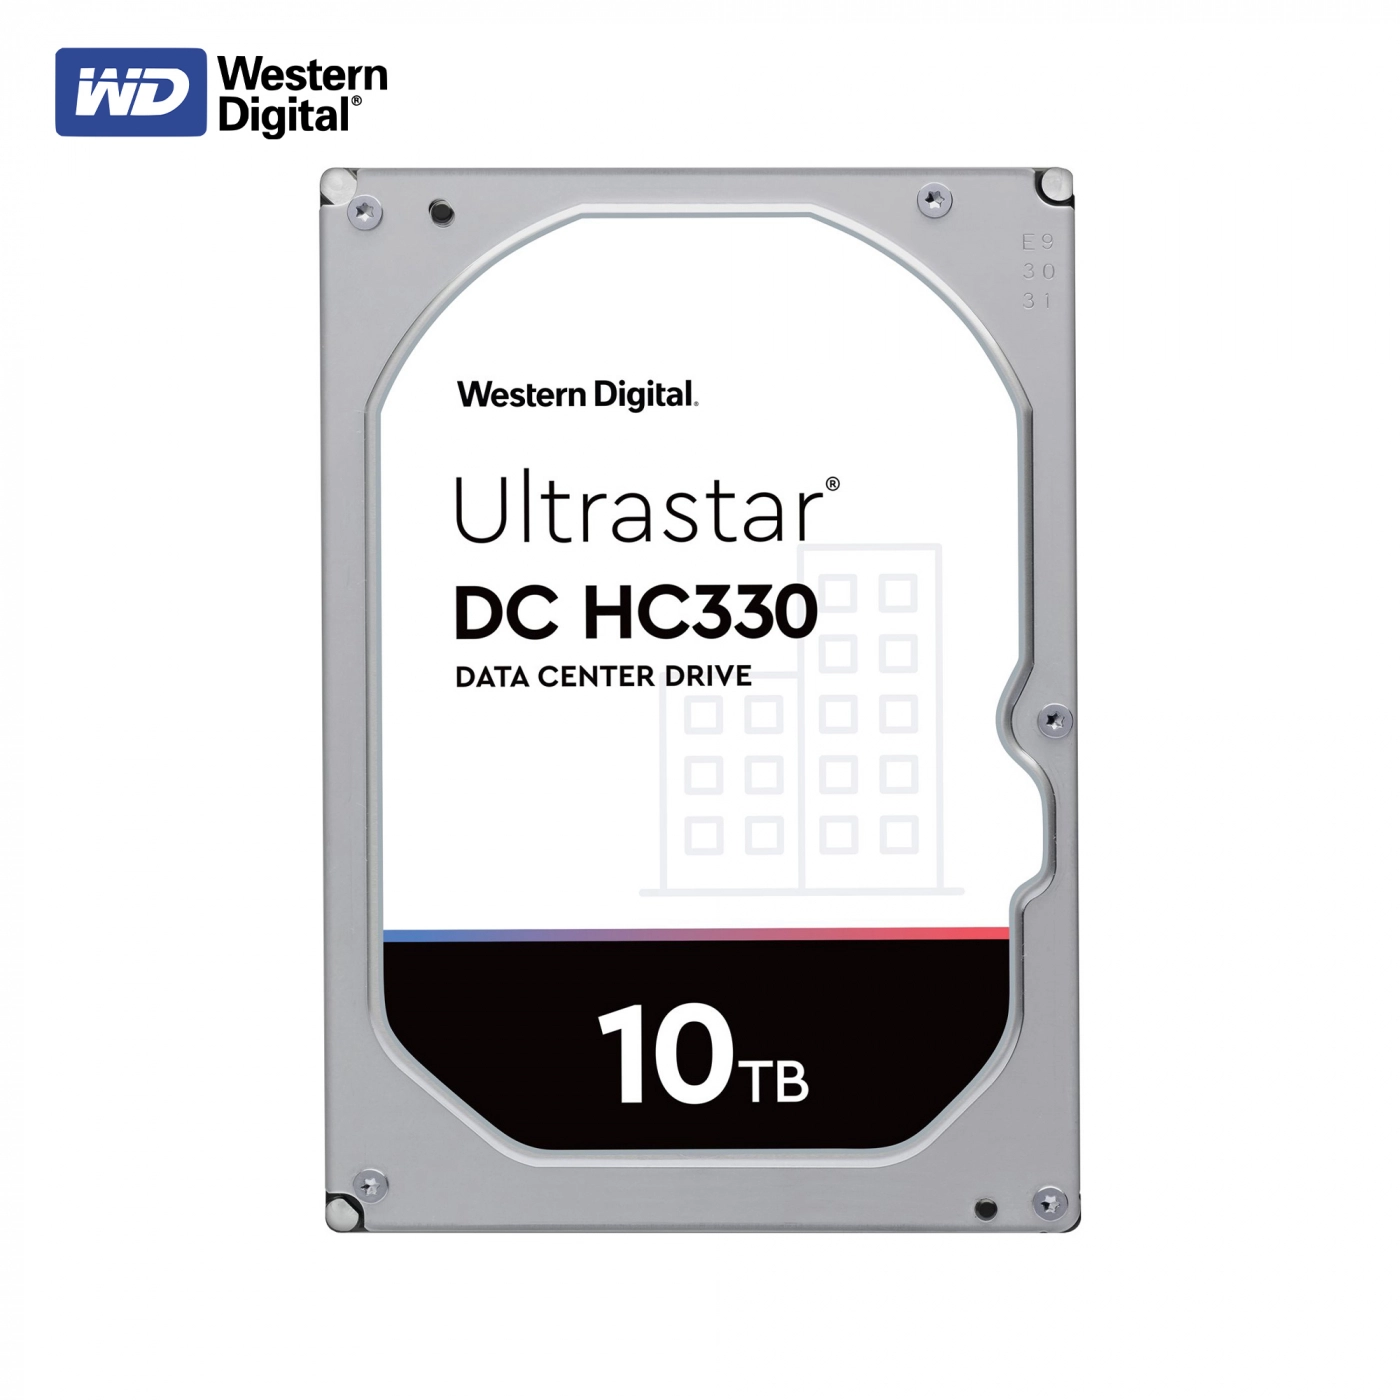 Купить Жесткий диск WD Ultrastar DC HC330 WUS721010ALE6L4 10 ТБ 256/7200 - фото 2